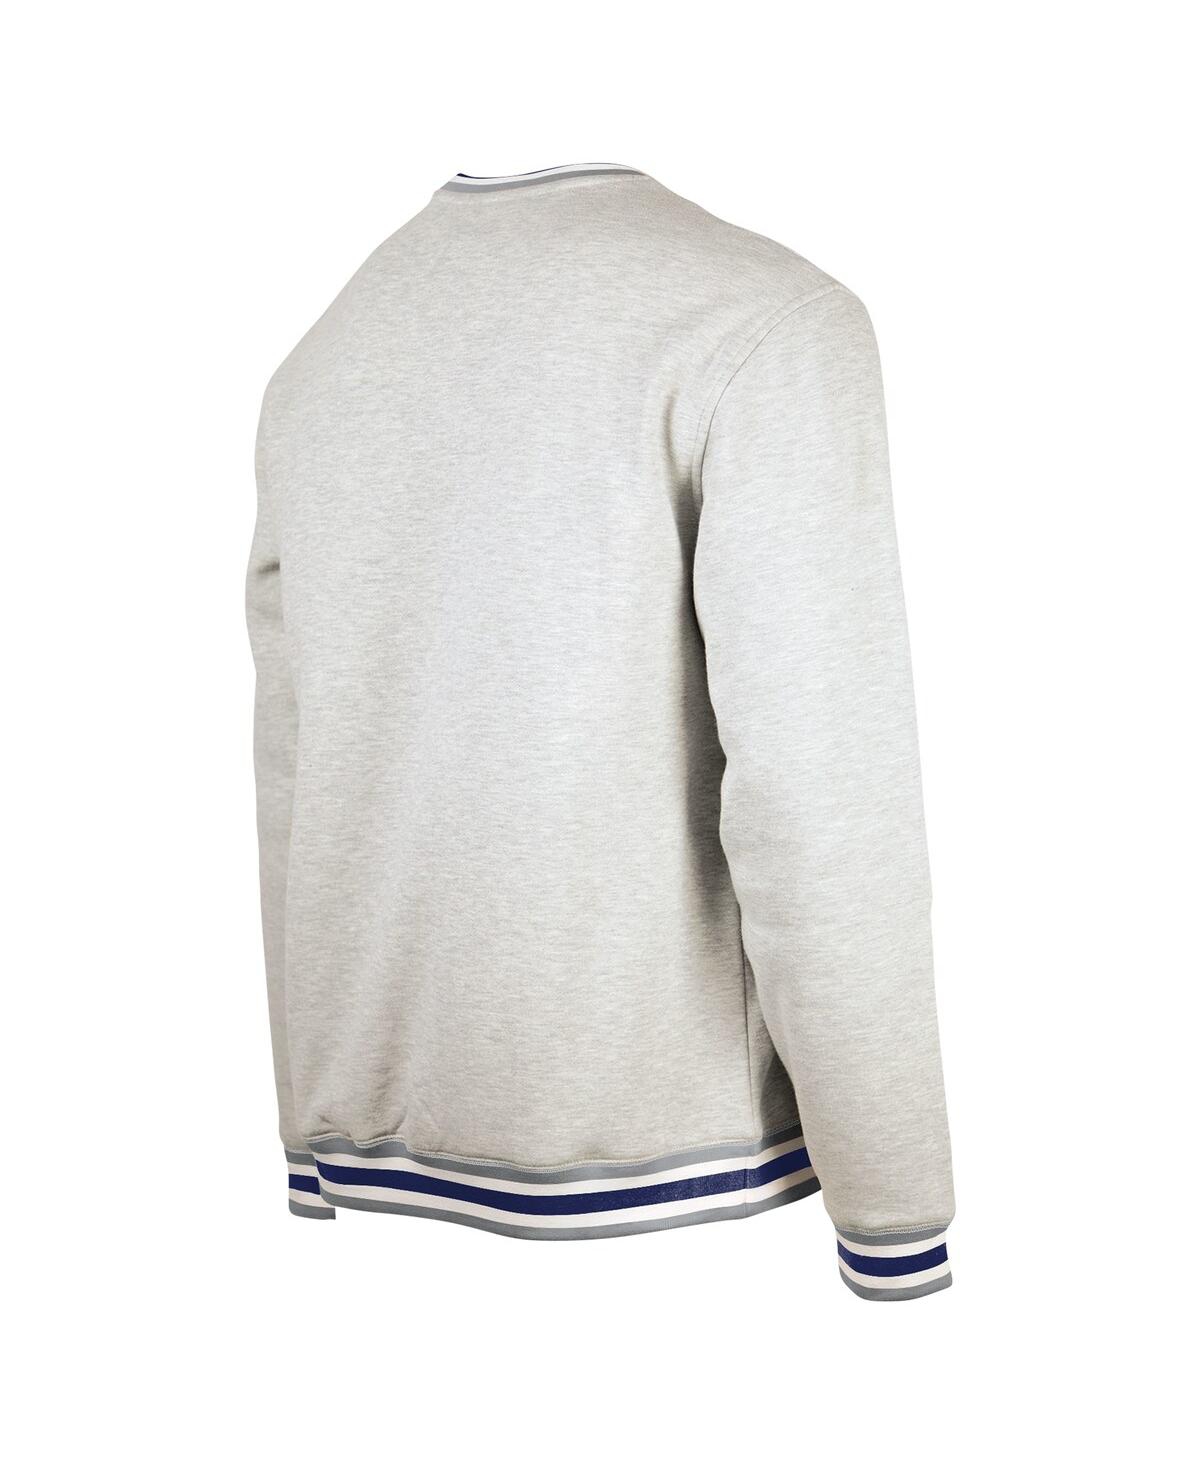 Shop New Era Men's Heather Gray Chicago Cubs Throwback Classic Pullover Sweatshirt